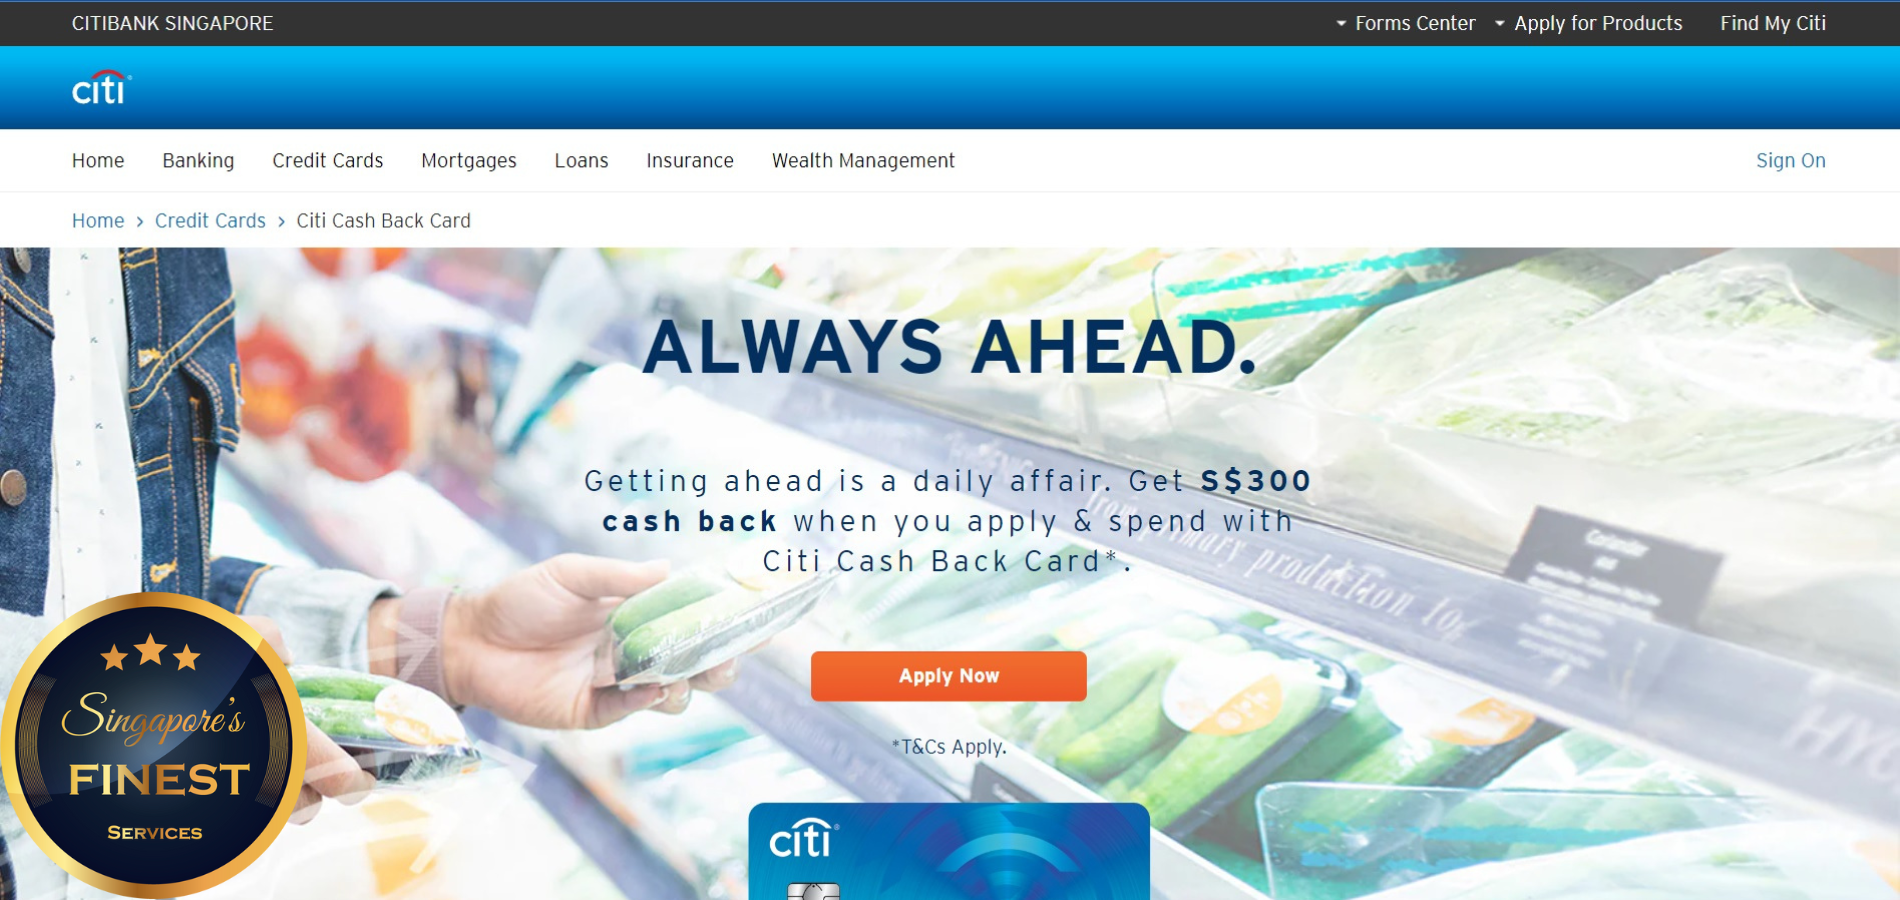 Citi Cash Back Card - Credit Cards Singapore